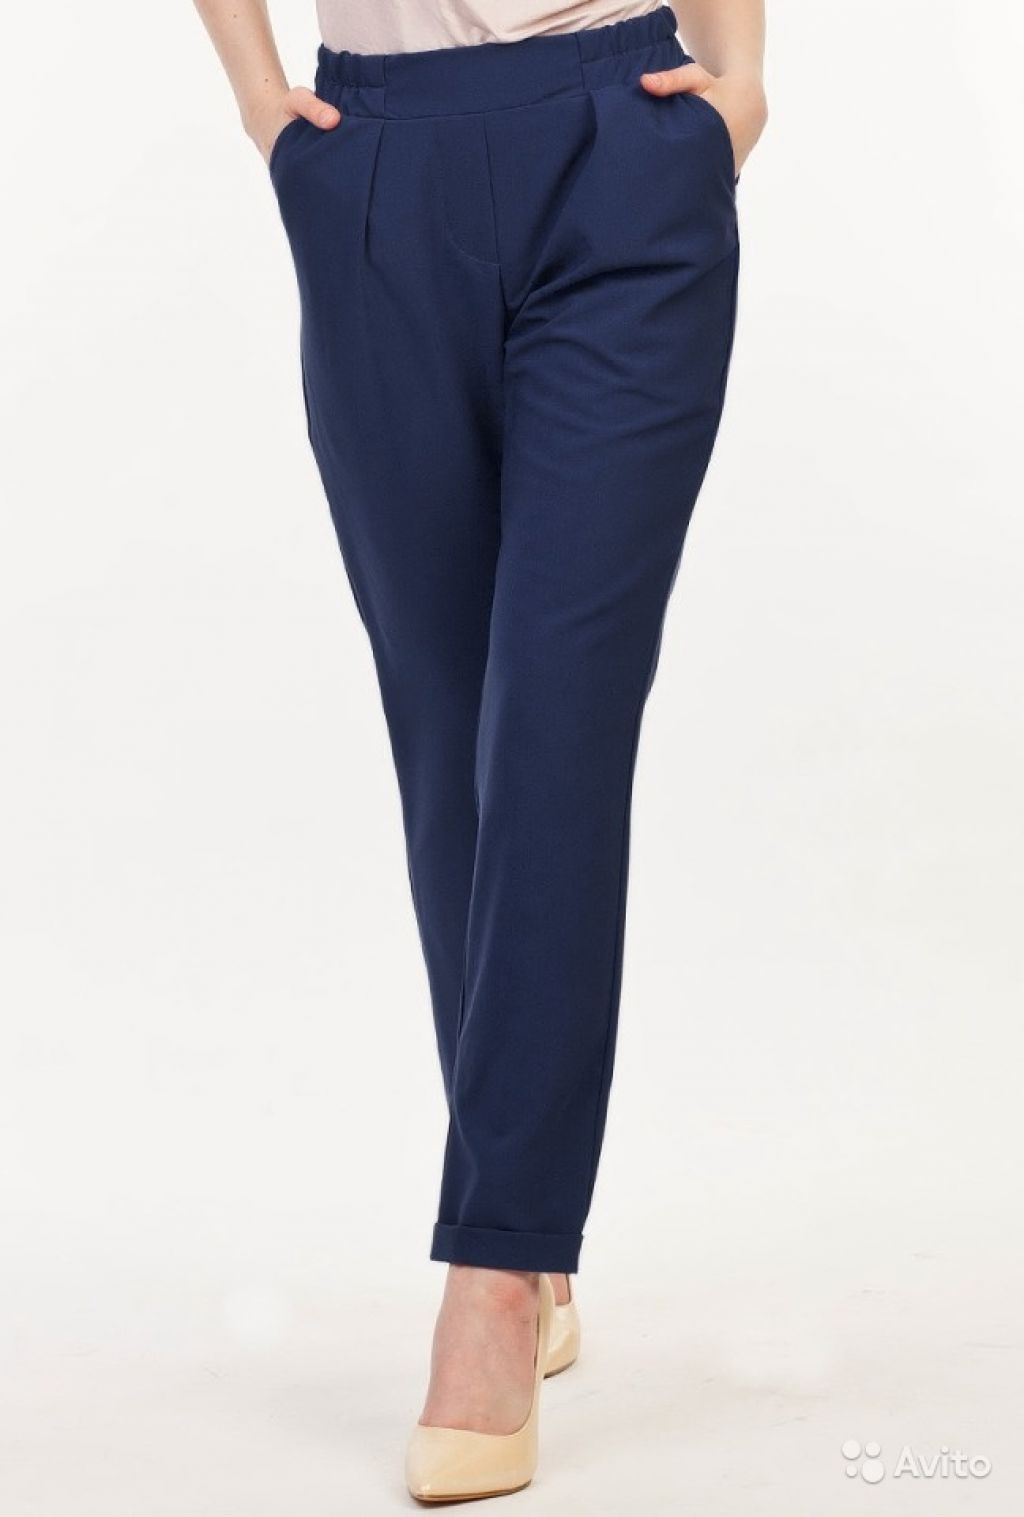 Вайлдберриз легкие женские брюки. Бл1701 брюки темно-синие Текстилэнд. Фирма comma шелковистые брюки. Брюки женские Fusion pantalon Lacivert 22874т. Вайлдберриз брюки женские модель 6162 Дюран.